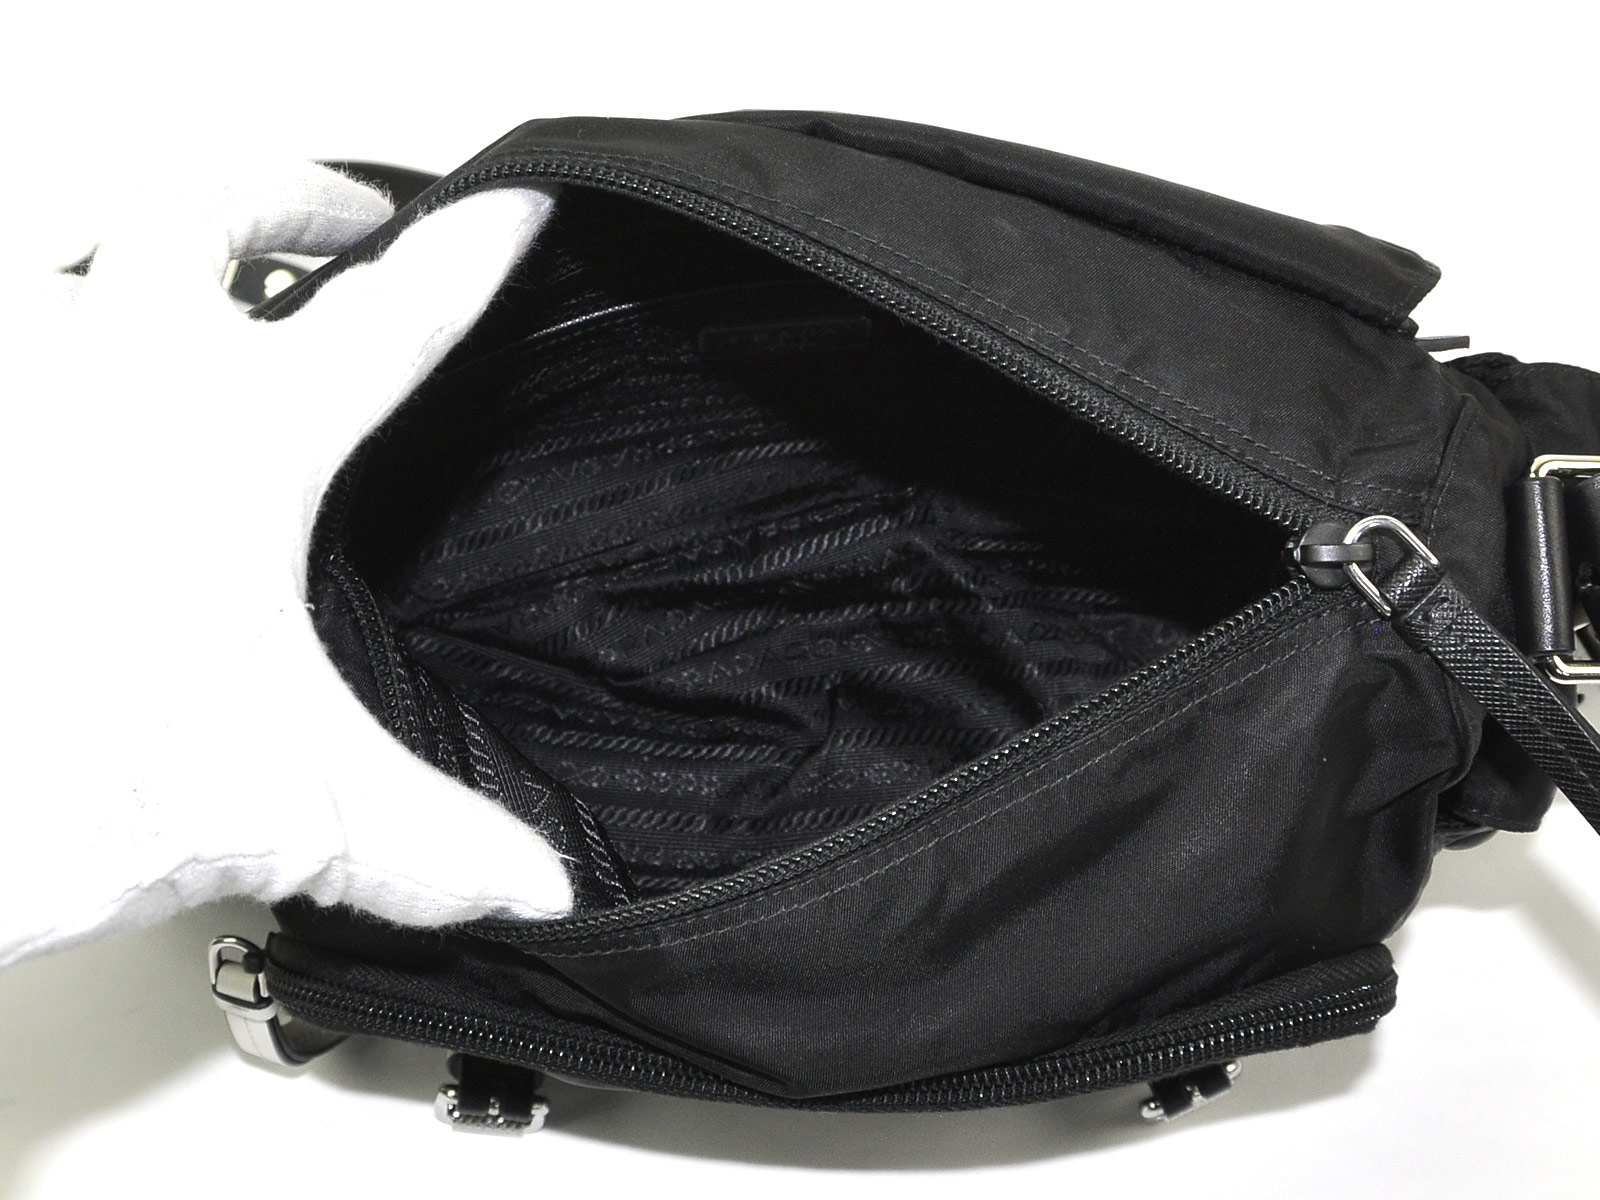 Auth PRADA Studs Shoulder Bag Black/White Nylon/Leather - 97079 | eBay